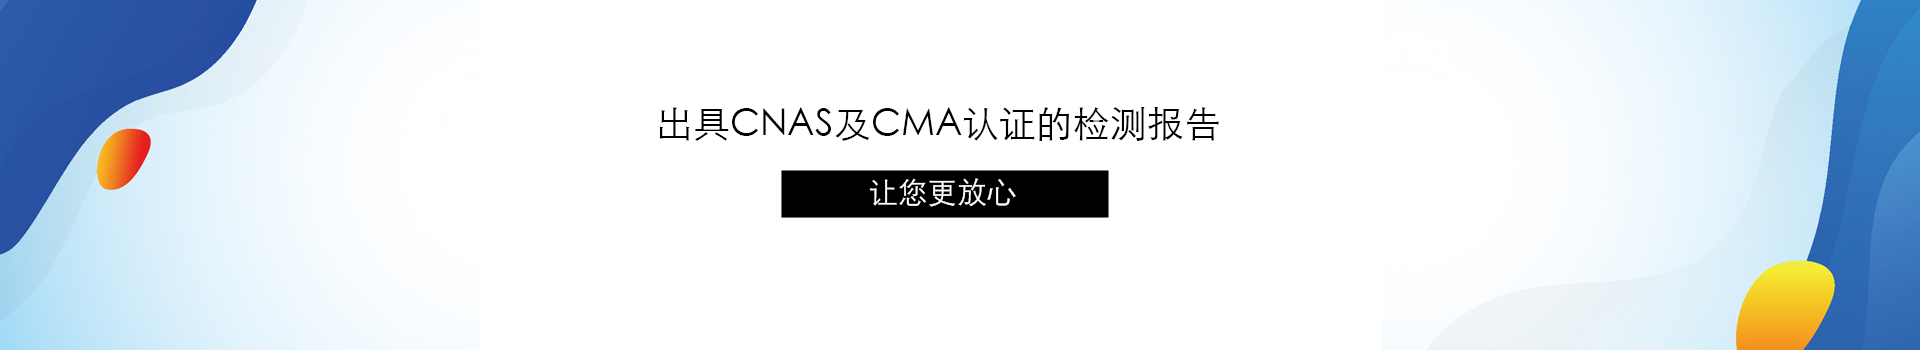 cma认证的检测机构-普汇恒达金属检测